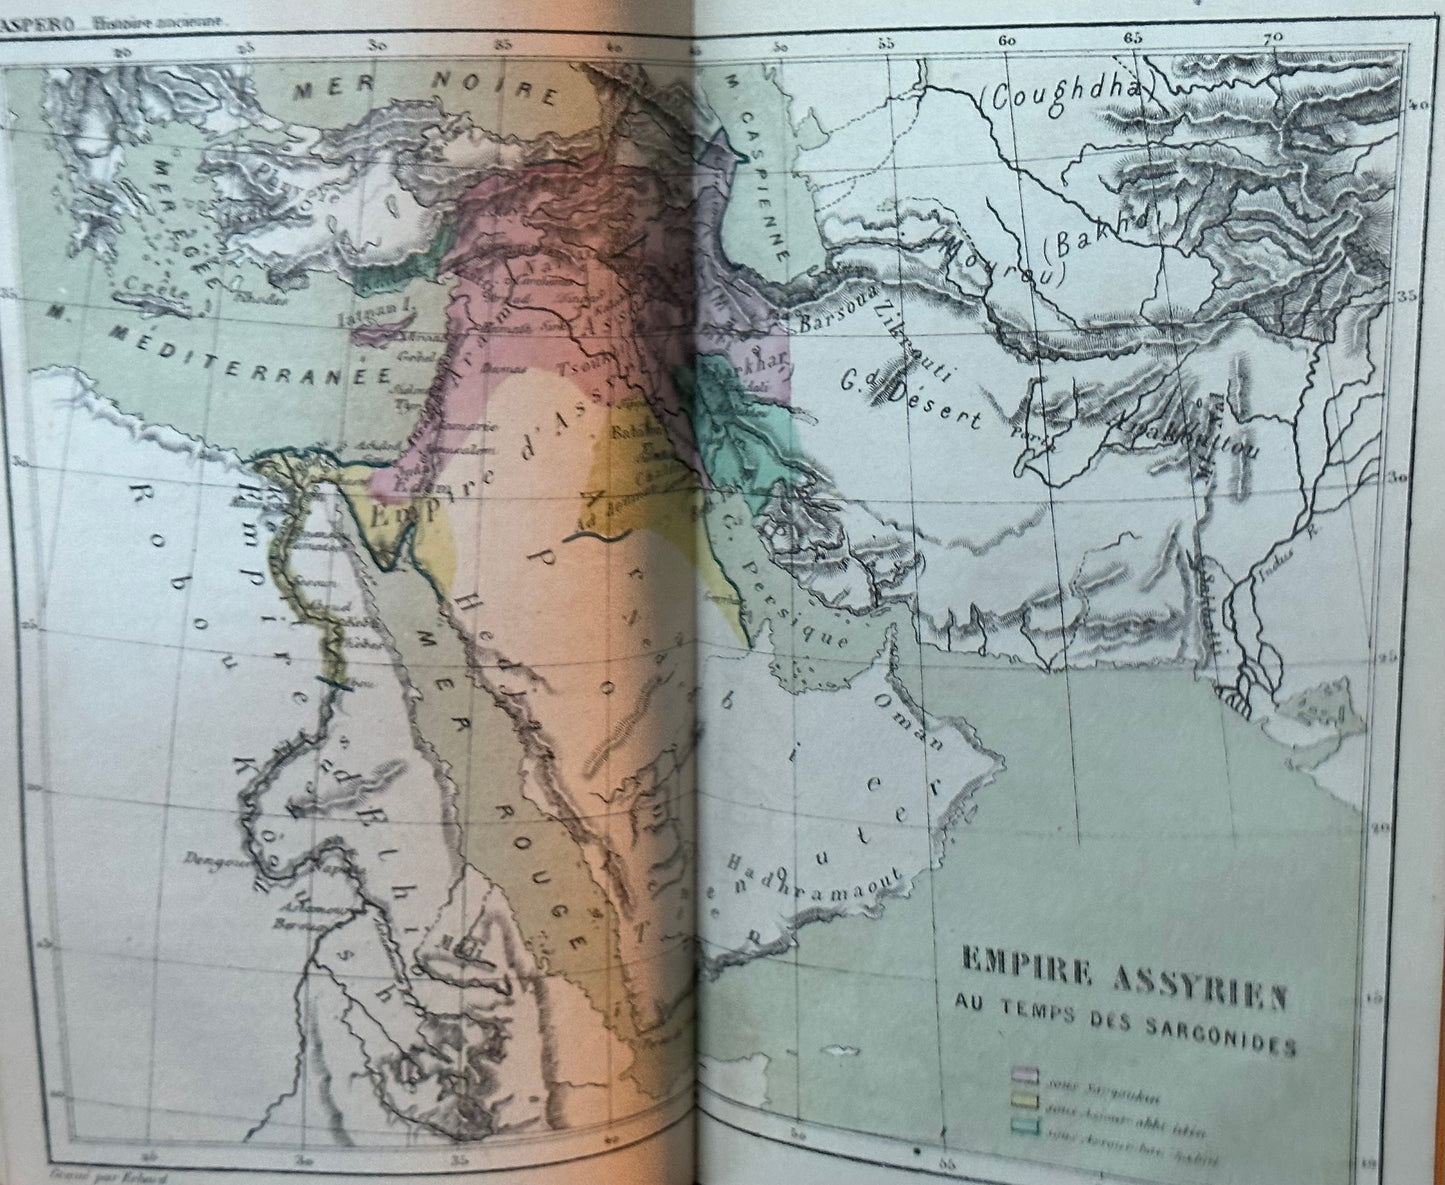 1875 G. Maspero’s History of Ancient People